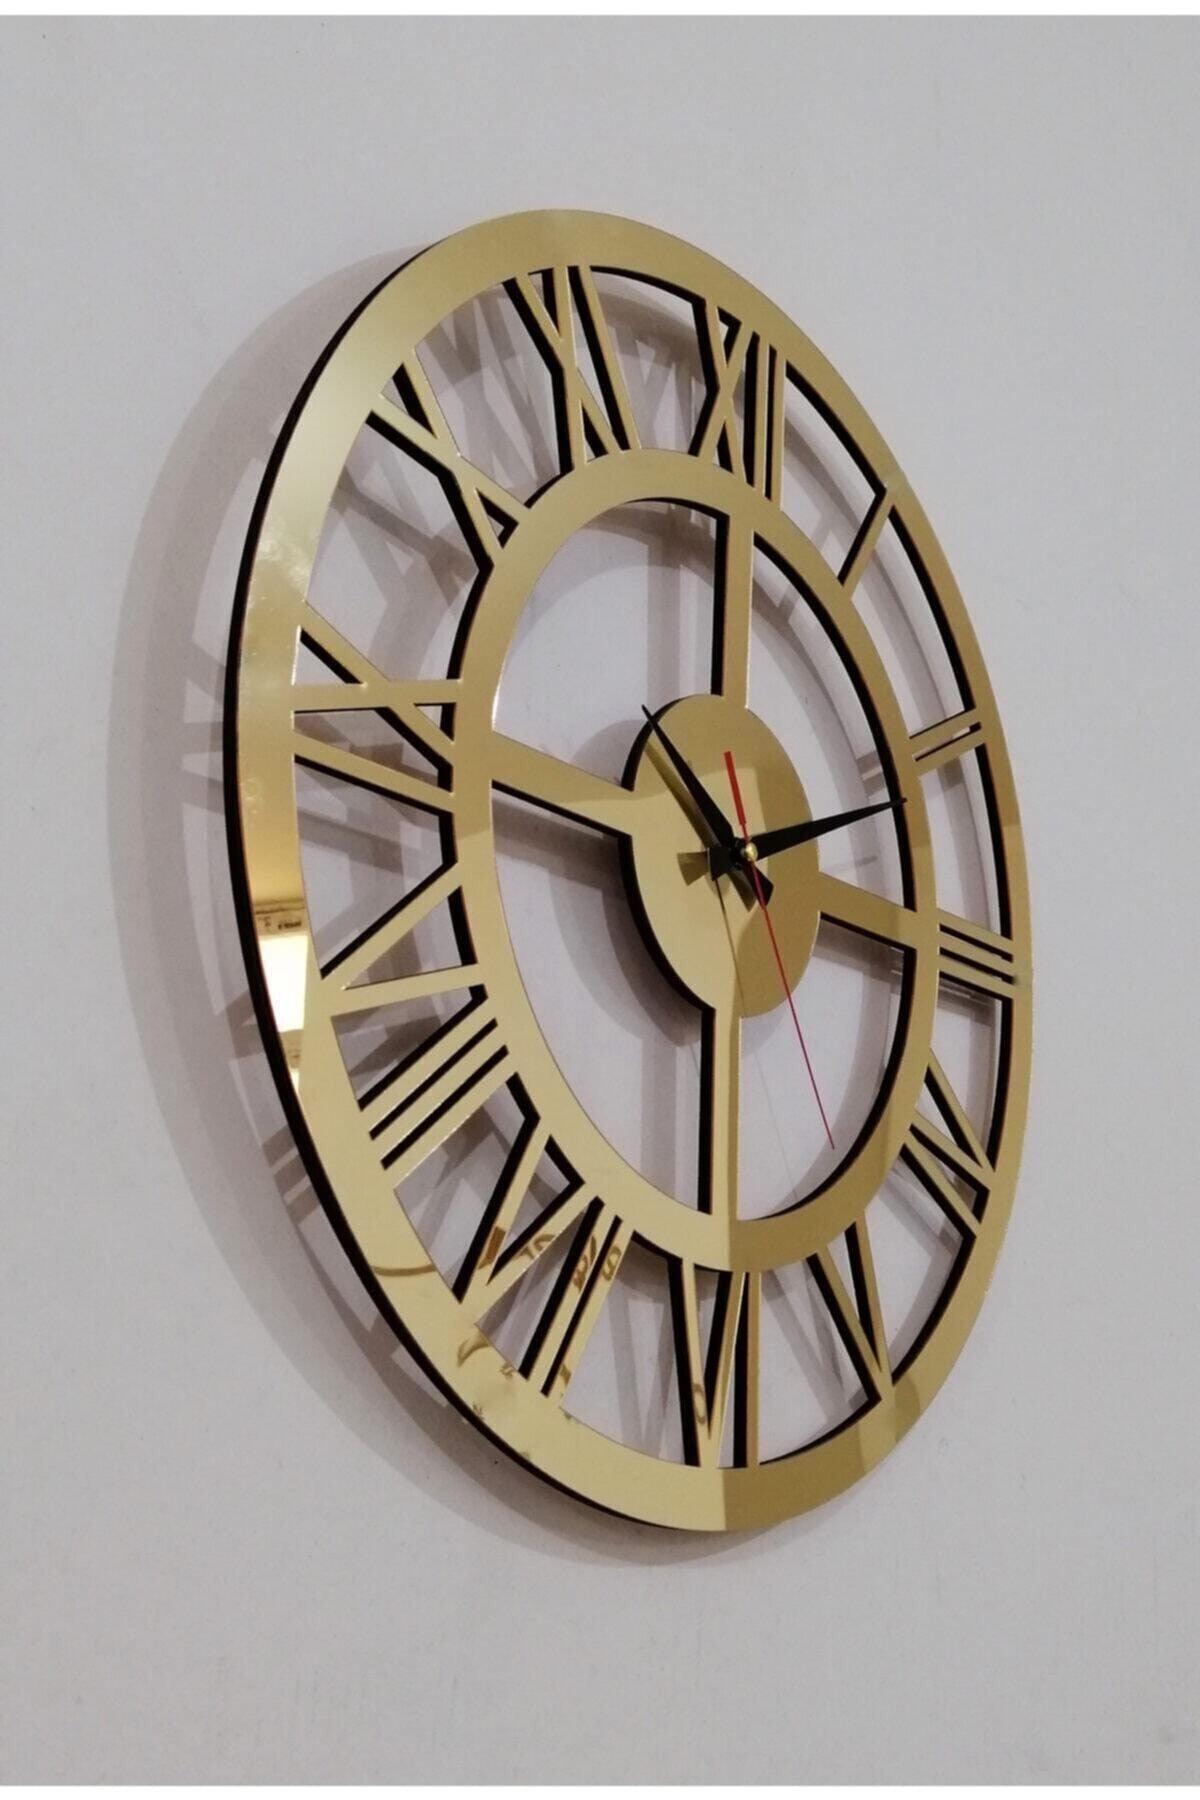 Decorative Mirrored Gold Plexi Wooden Wall Clock with Roman Numerals - Swordslife